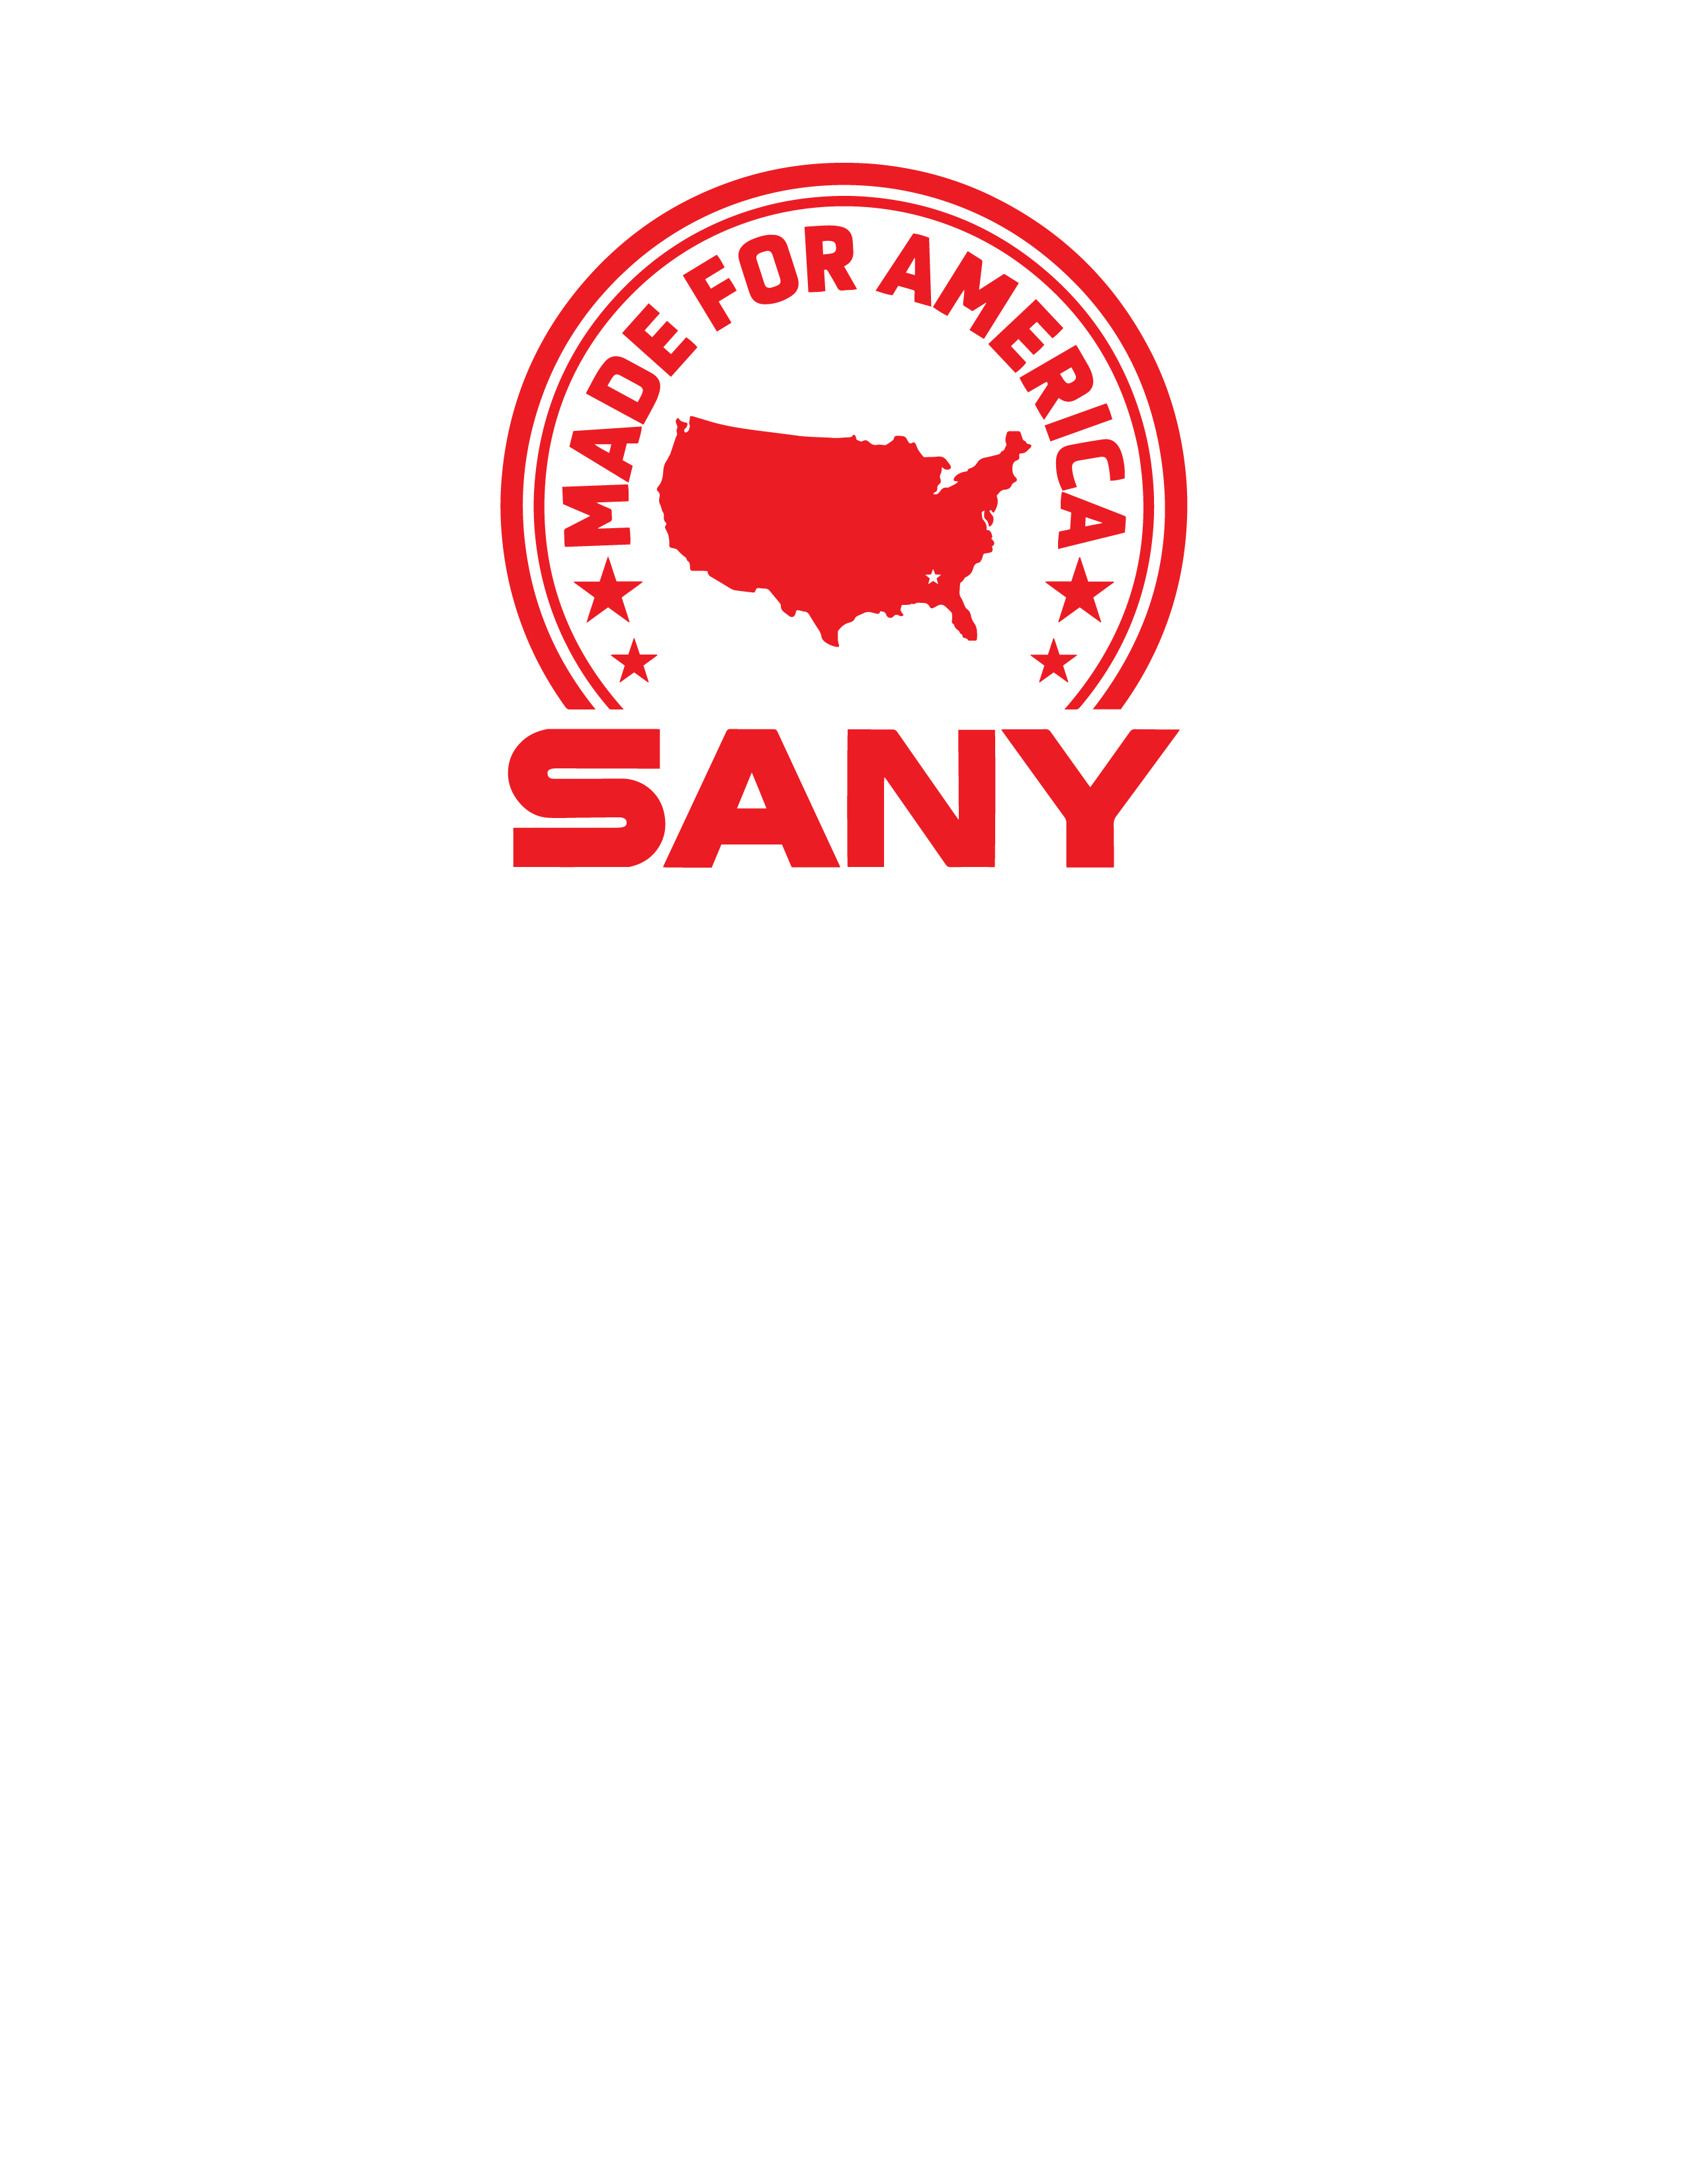 Sany logo vector download free